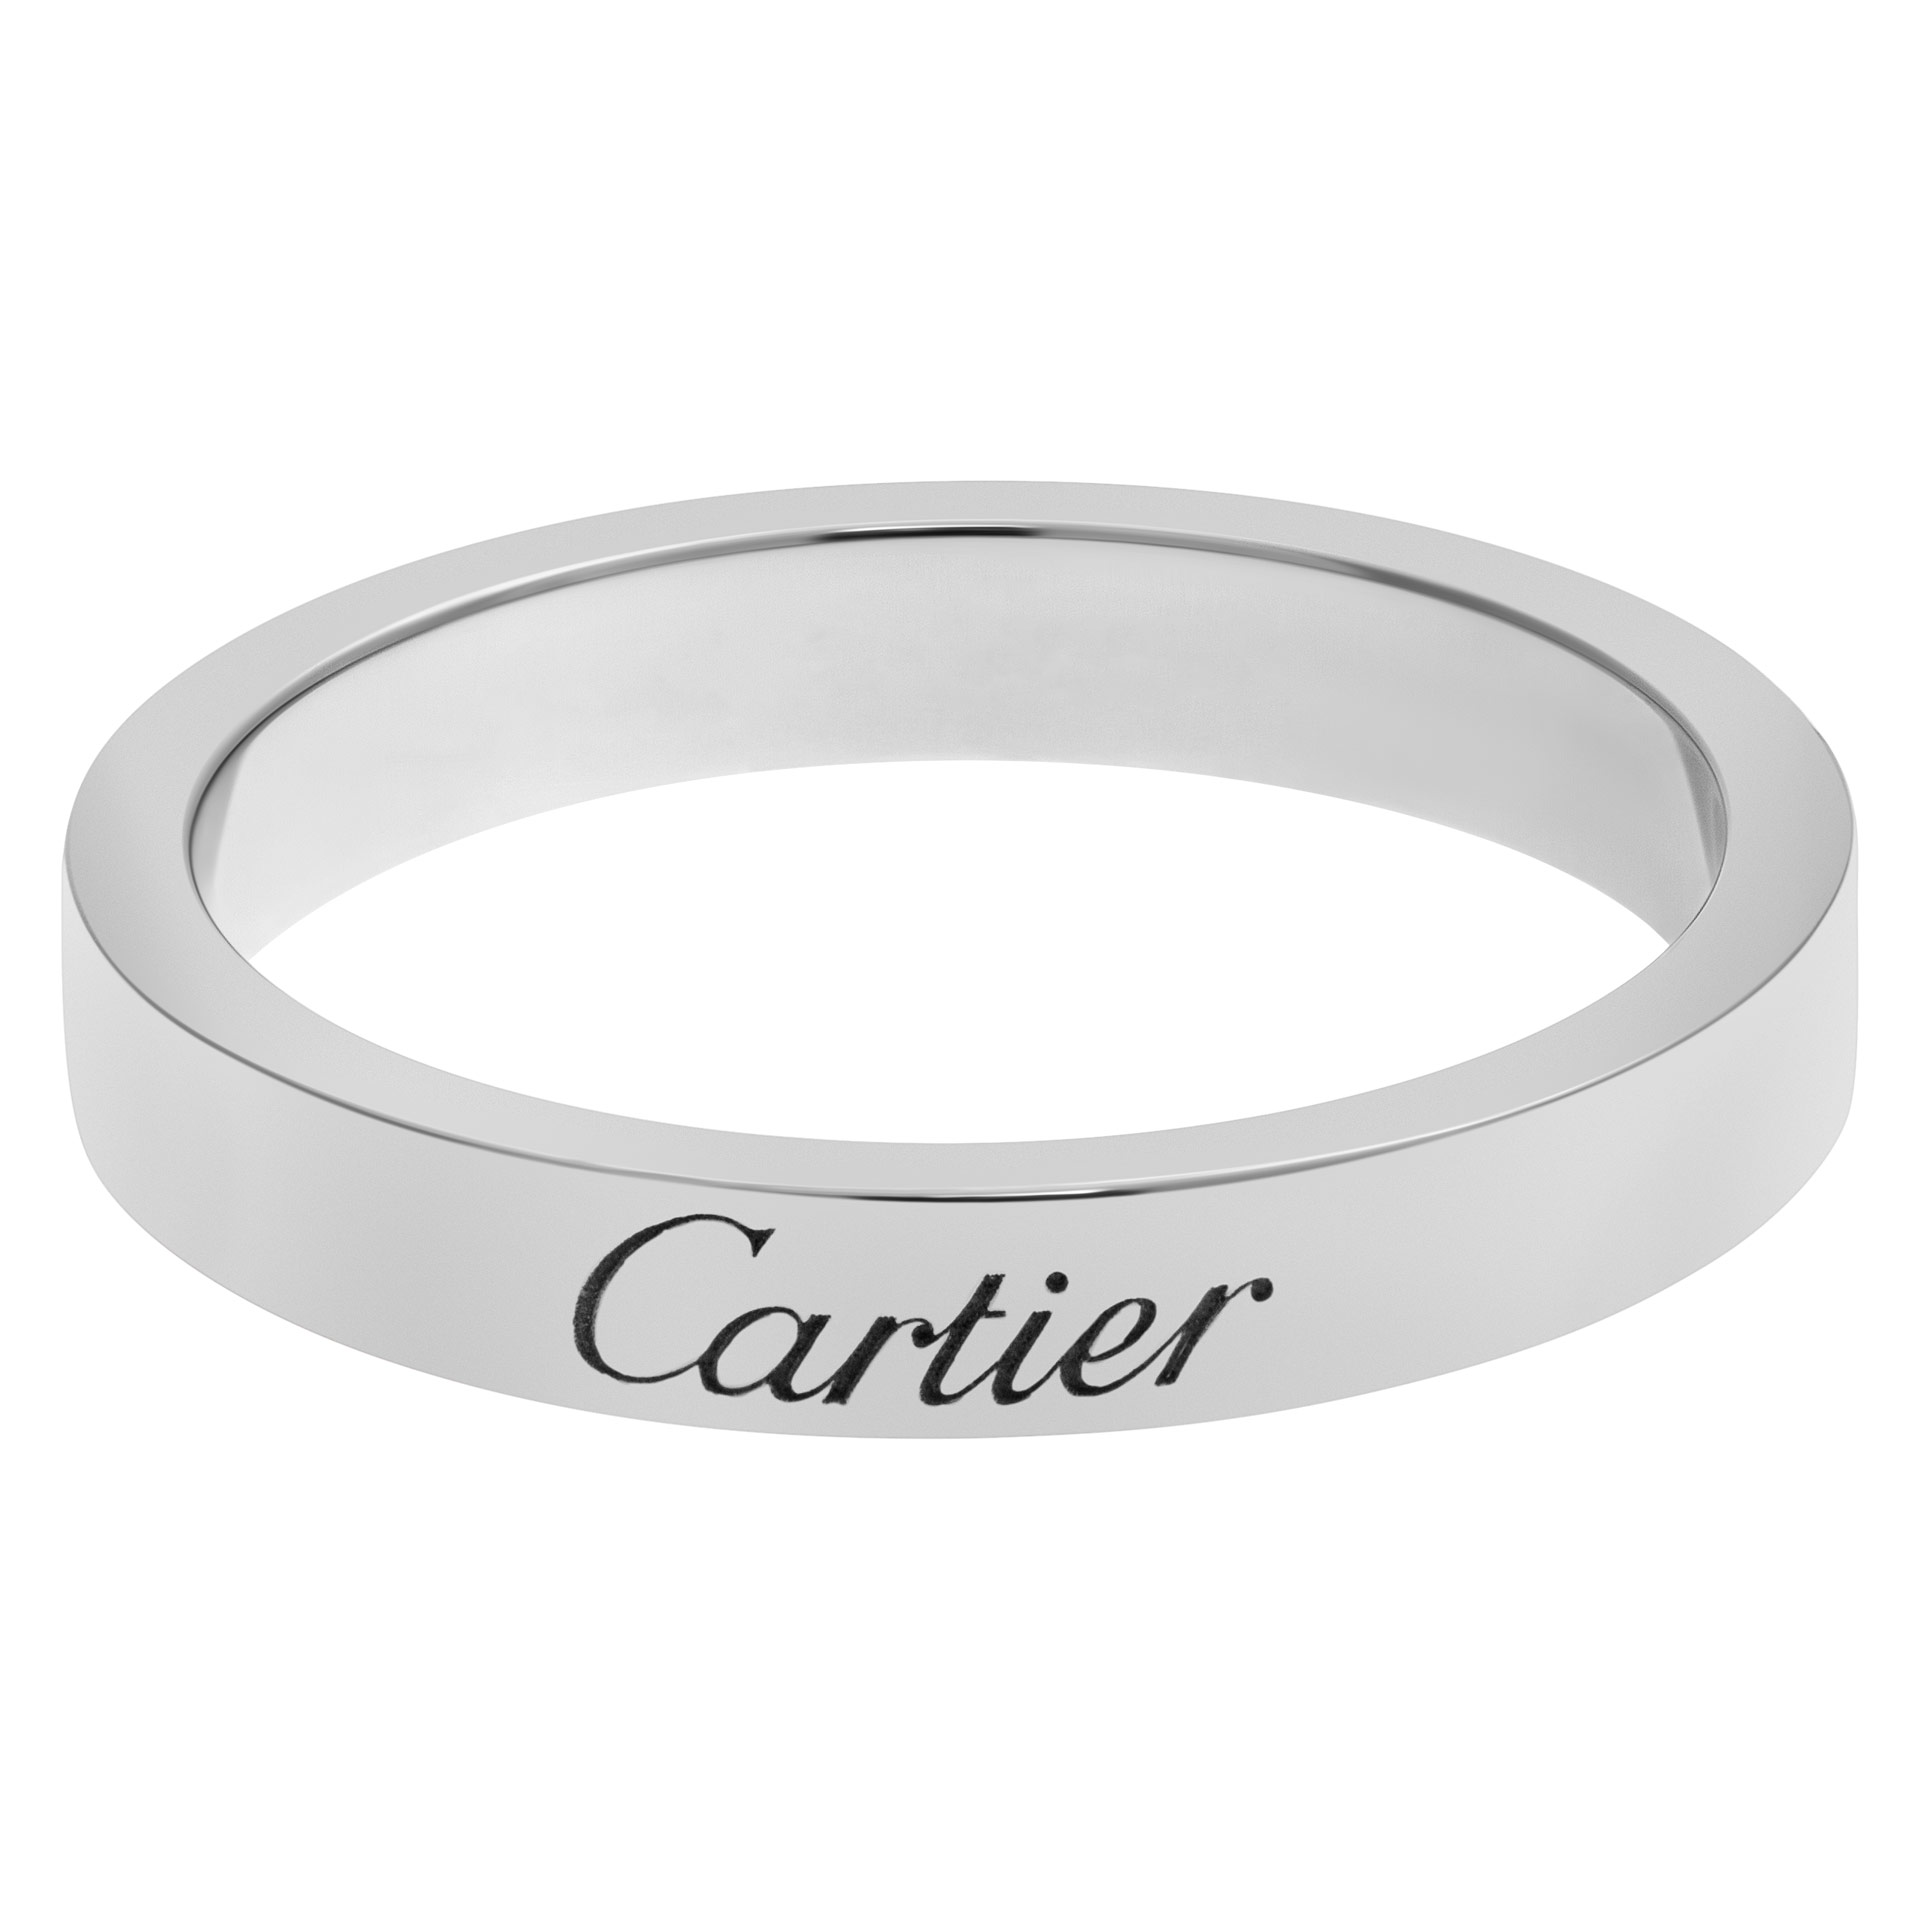 C De Cartier wedding band in Platinum